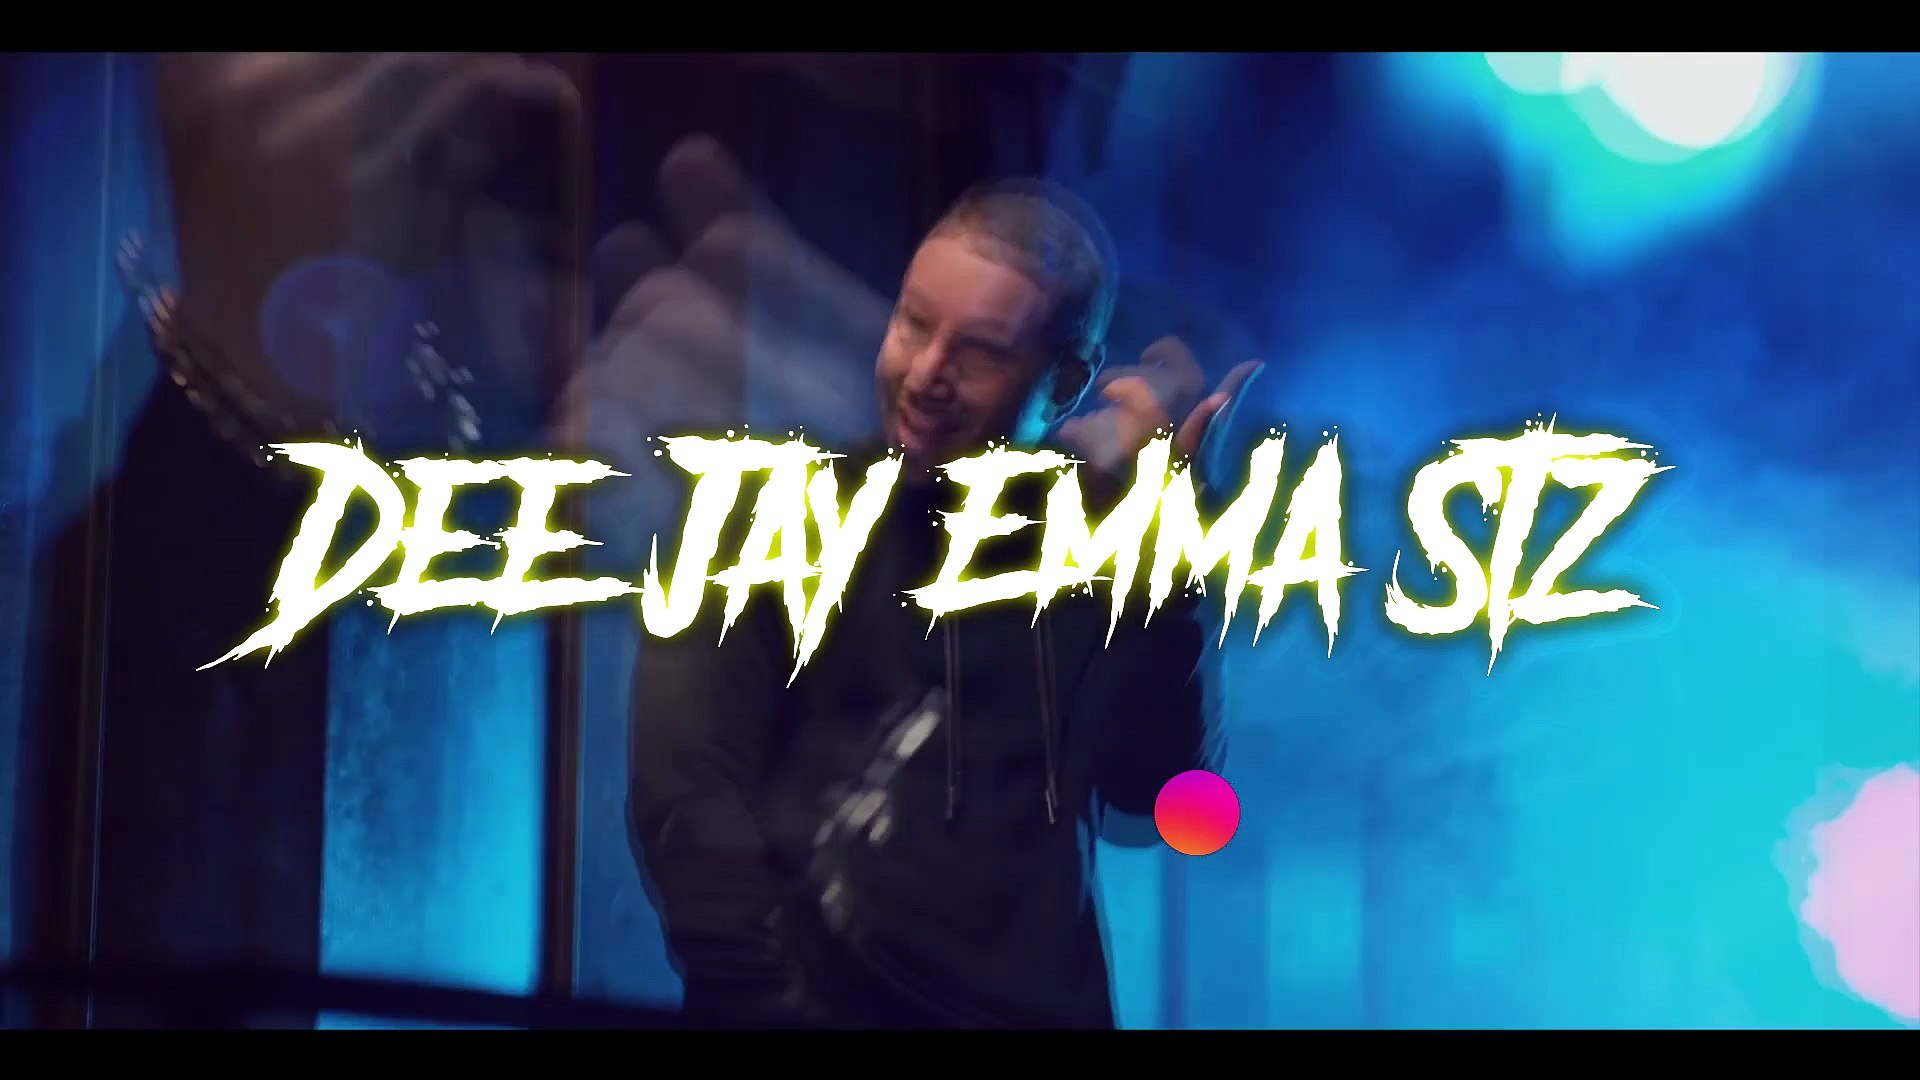 ⁣J Balvin - Ay Vamos Rmx Dee Jay Emma Stz